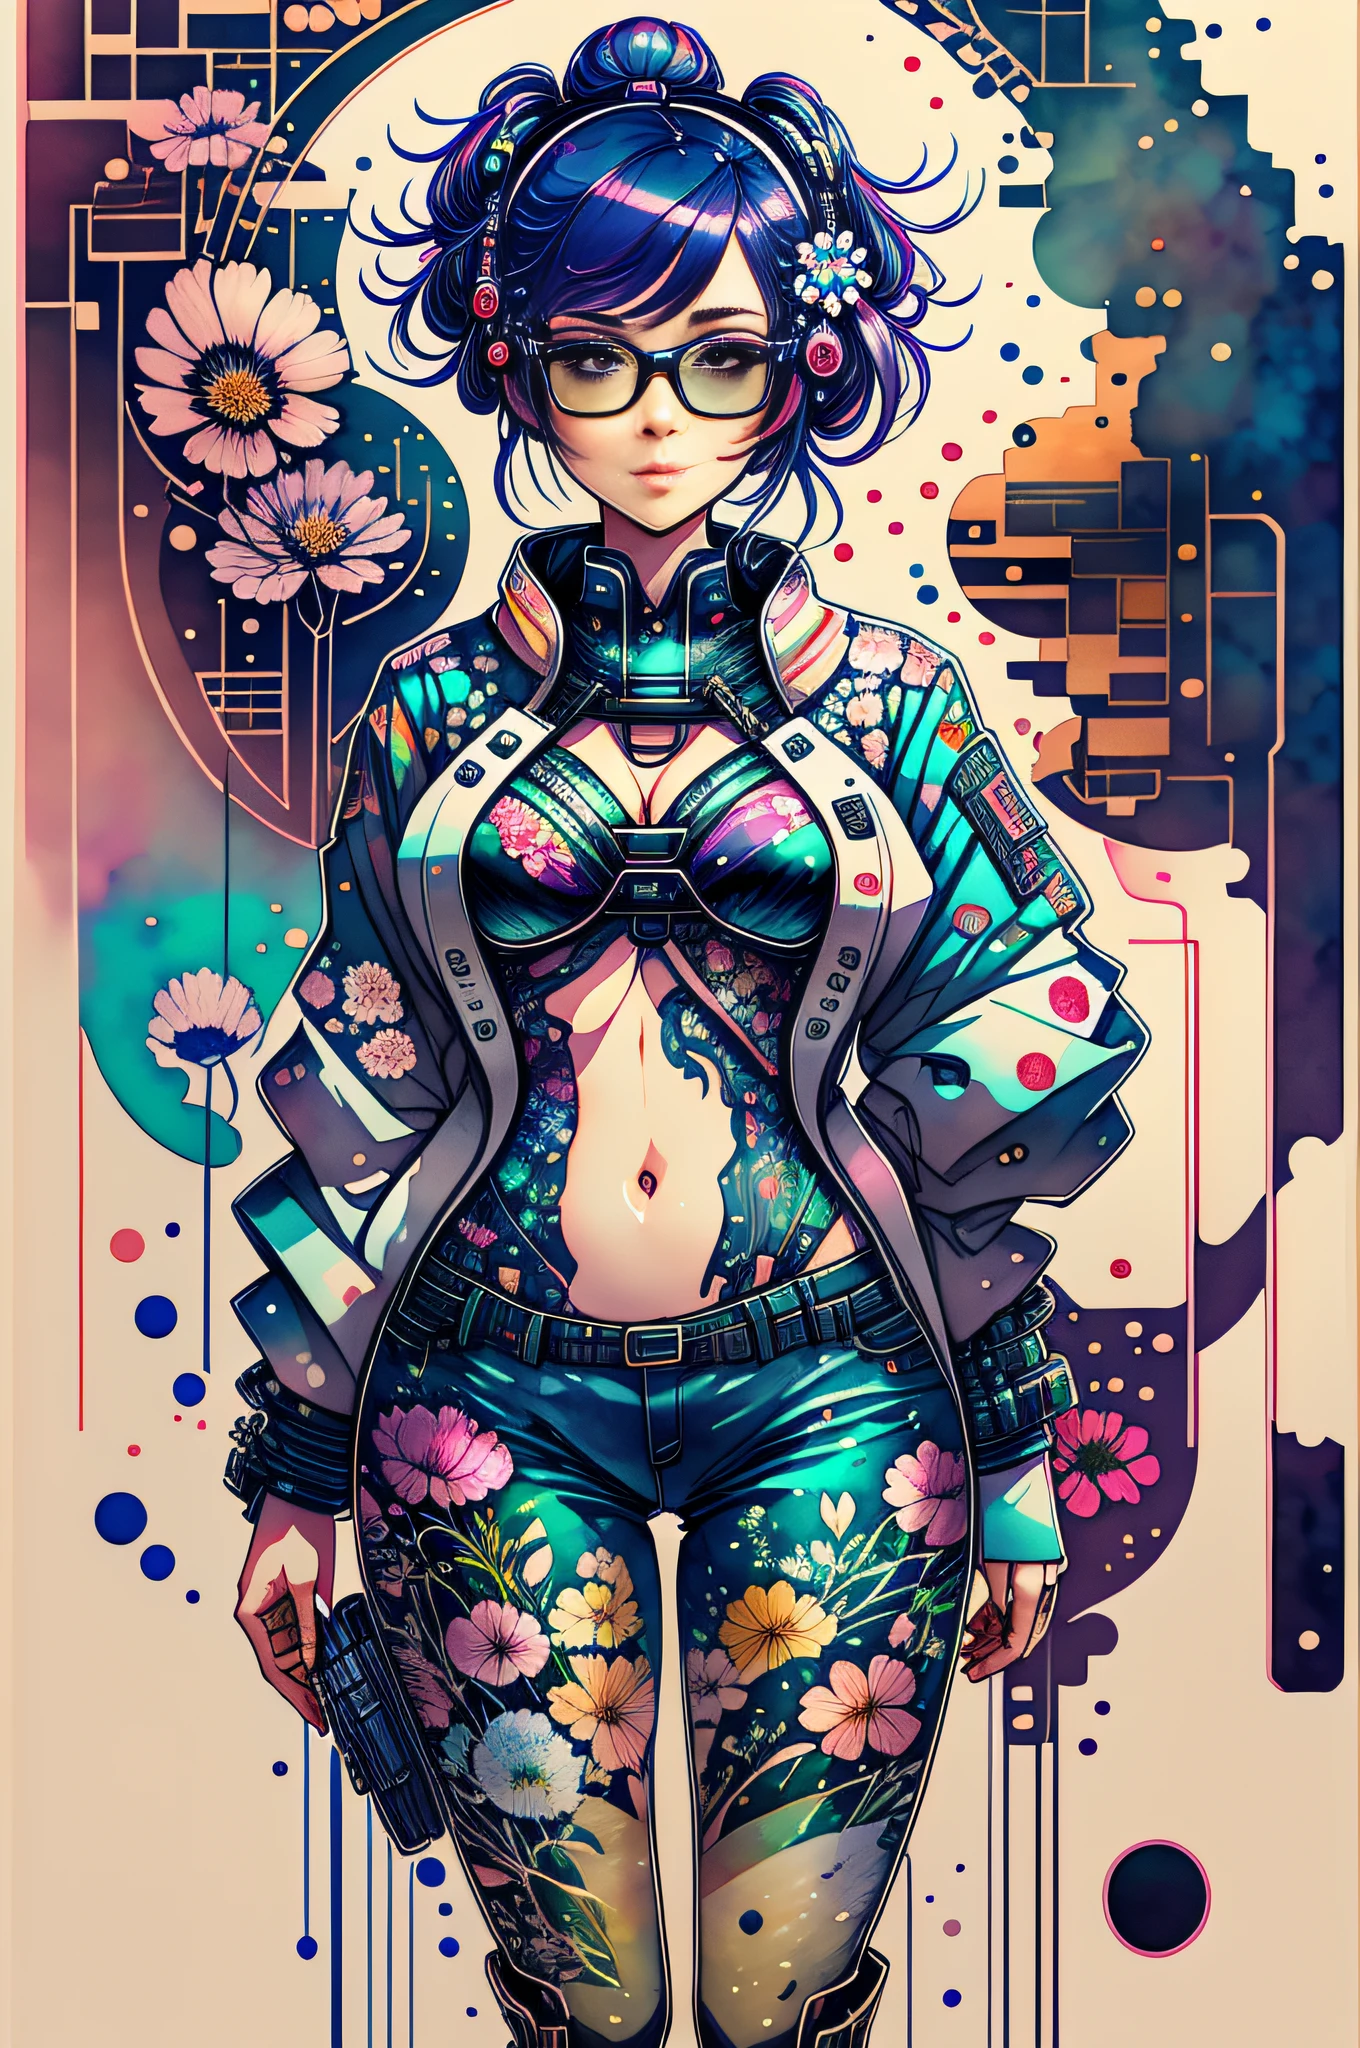 "corpo todo, cores de água, desenho a tinta, Linda mulher ciberpunk, usando óculos digitais inteligentes, fundo floral, no estilo ukiyo-e".